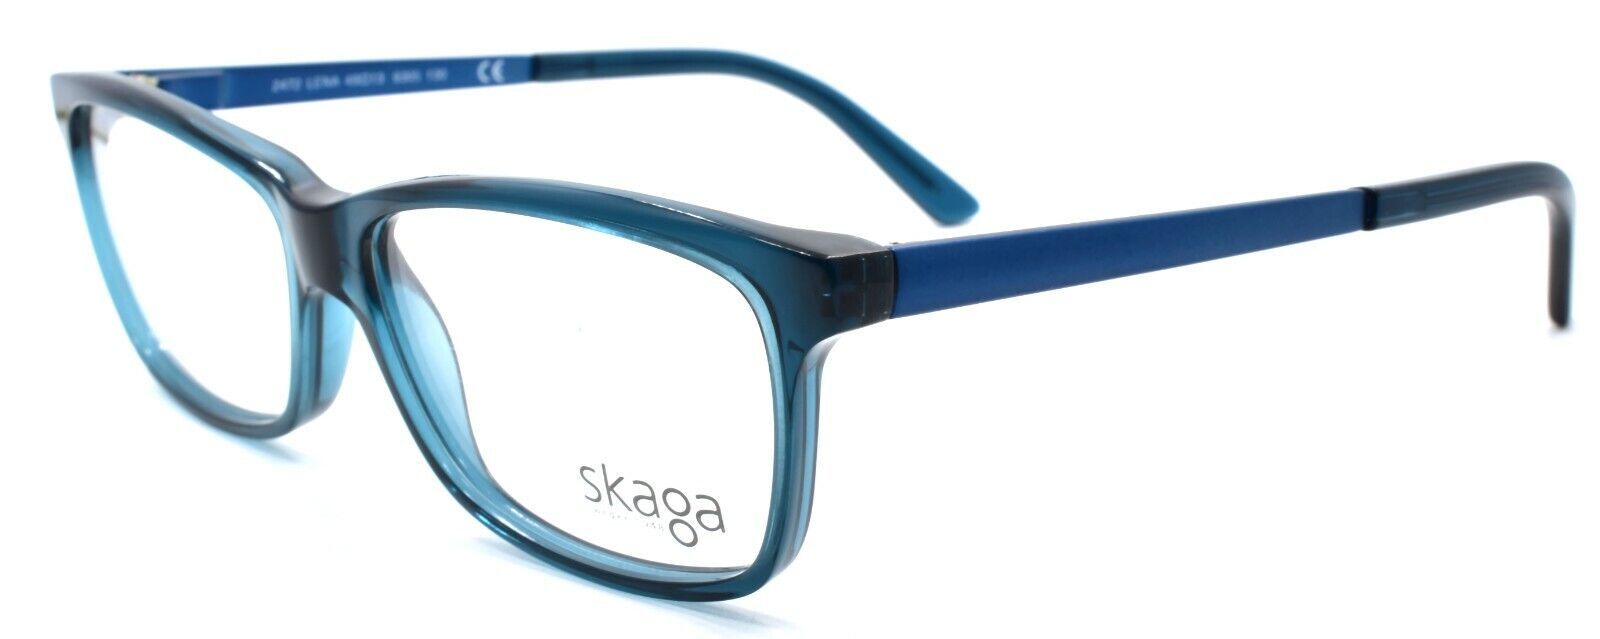 1-Skaga 2472 Lena 9305 Girls Eyeglasses Frames 49-13-130 Petrol-Does not apply-IKSpecs